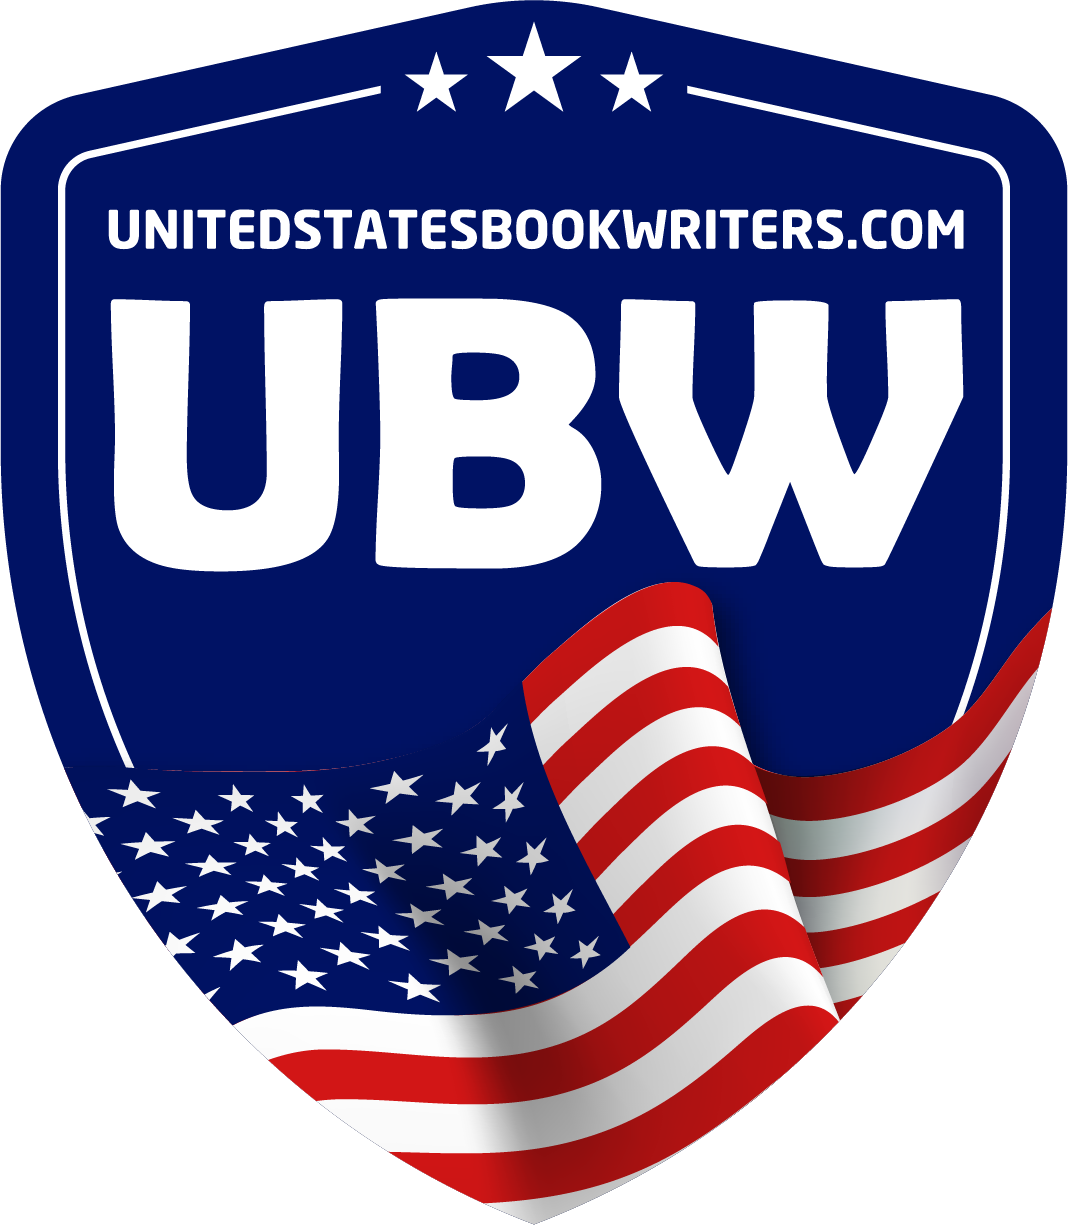 Unitedstatesbookwriters logo